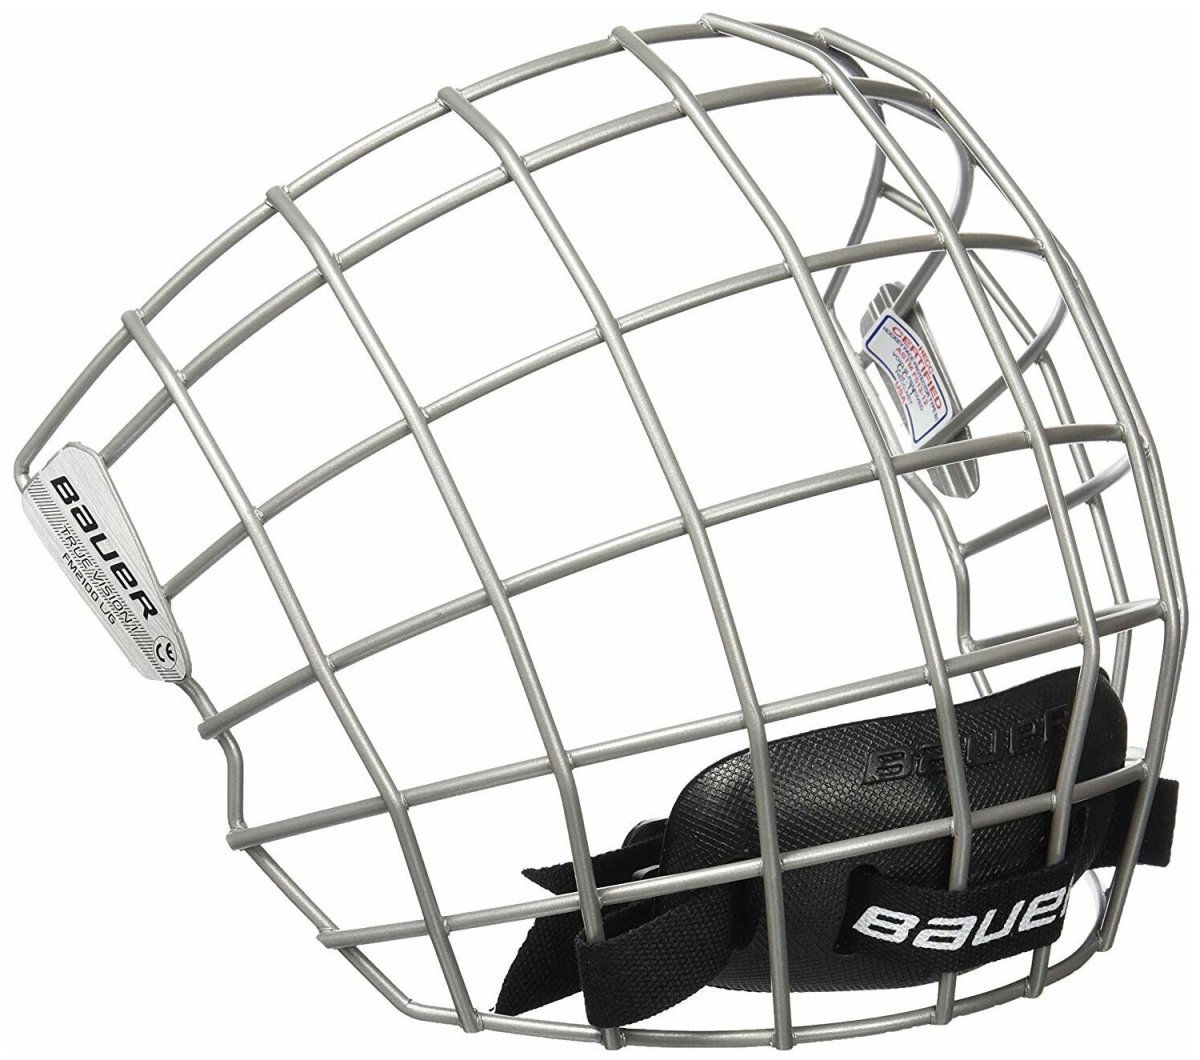 Запчасти для шлема Bauer 2100 Facemask SR